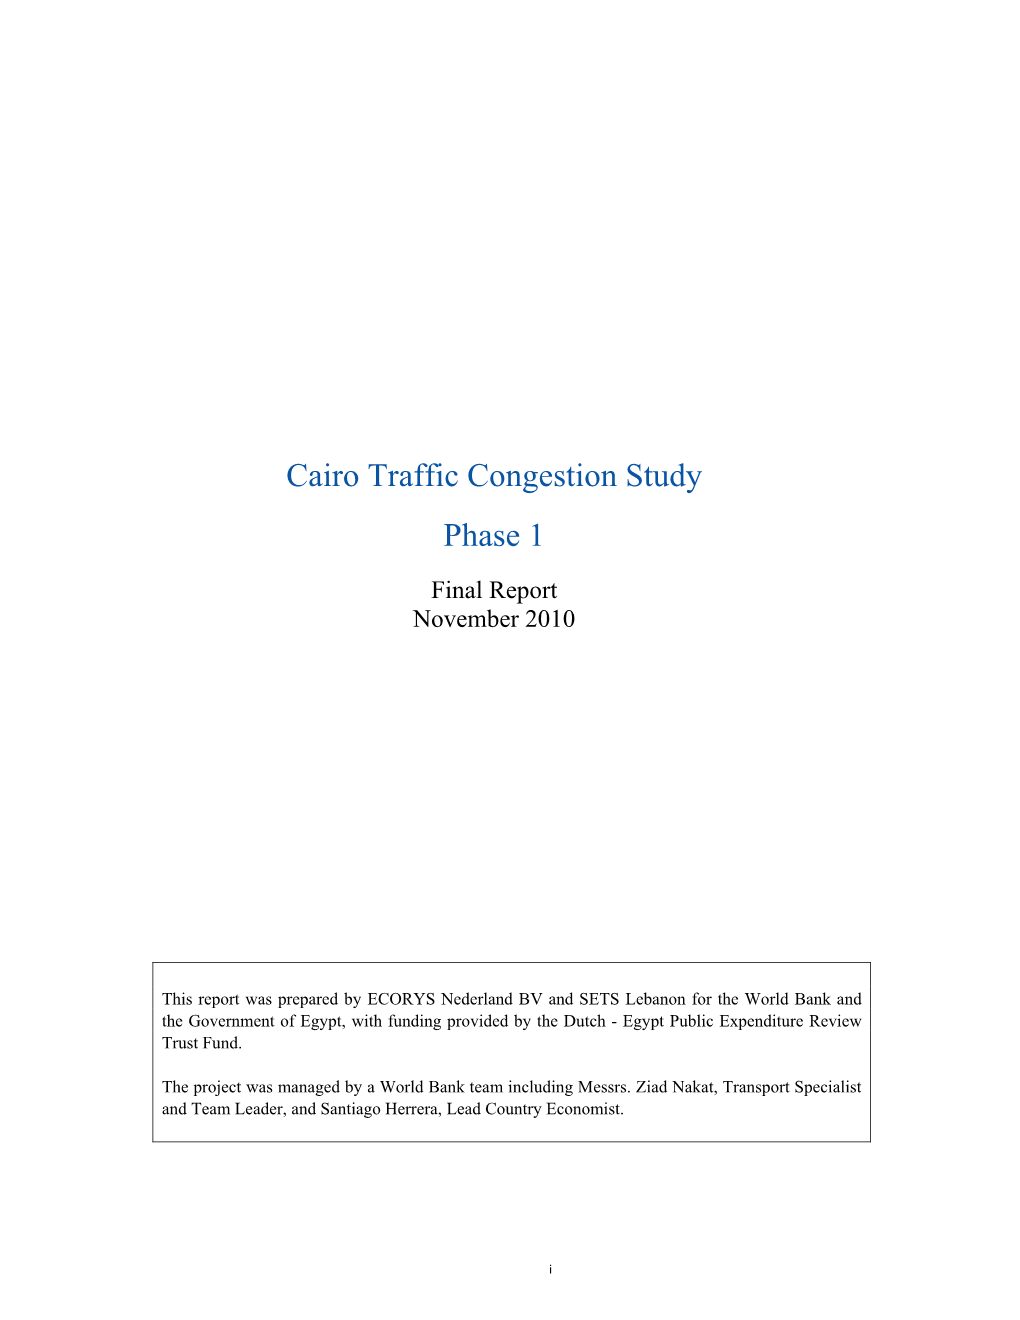 Cairo Traffic Congestion Study Phase 1